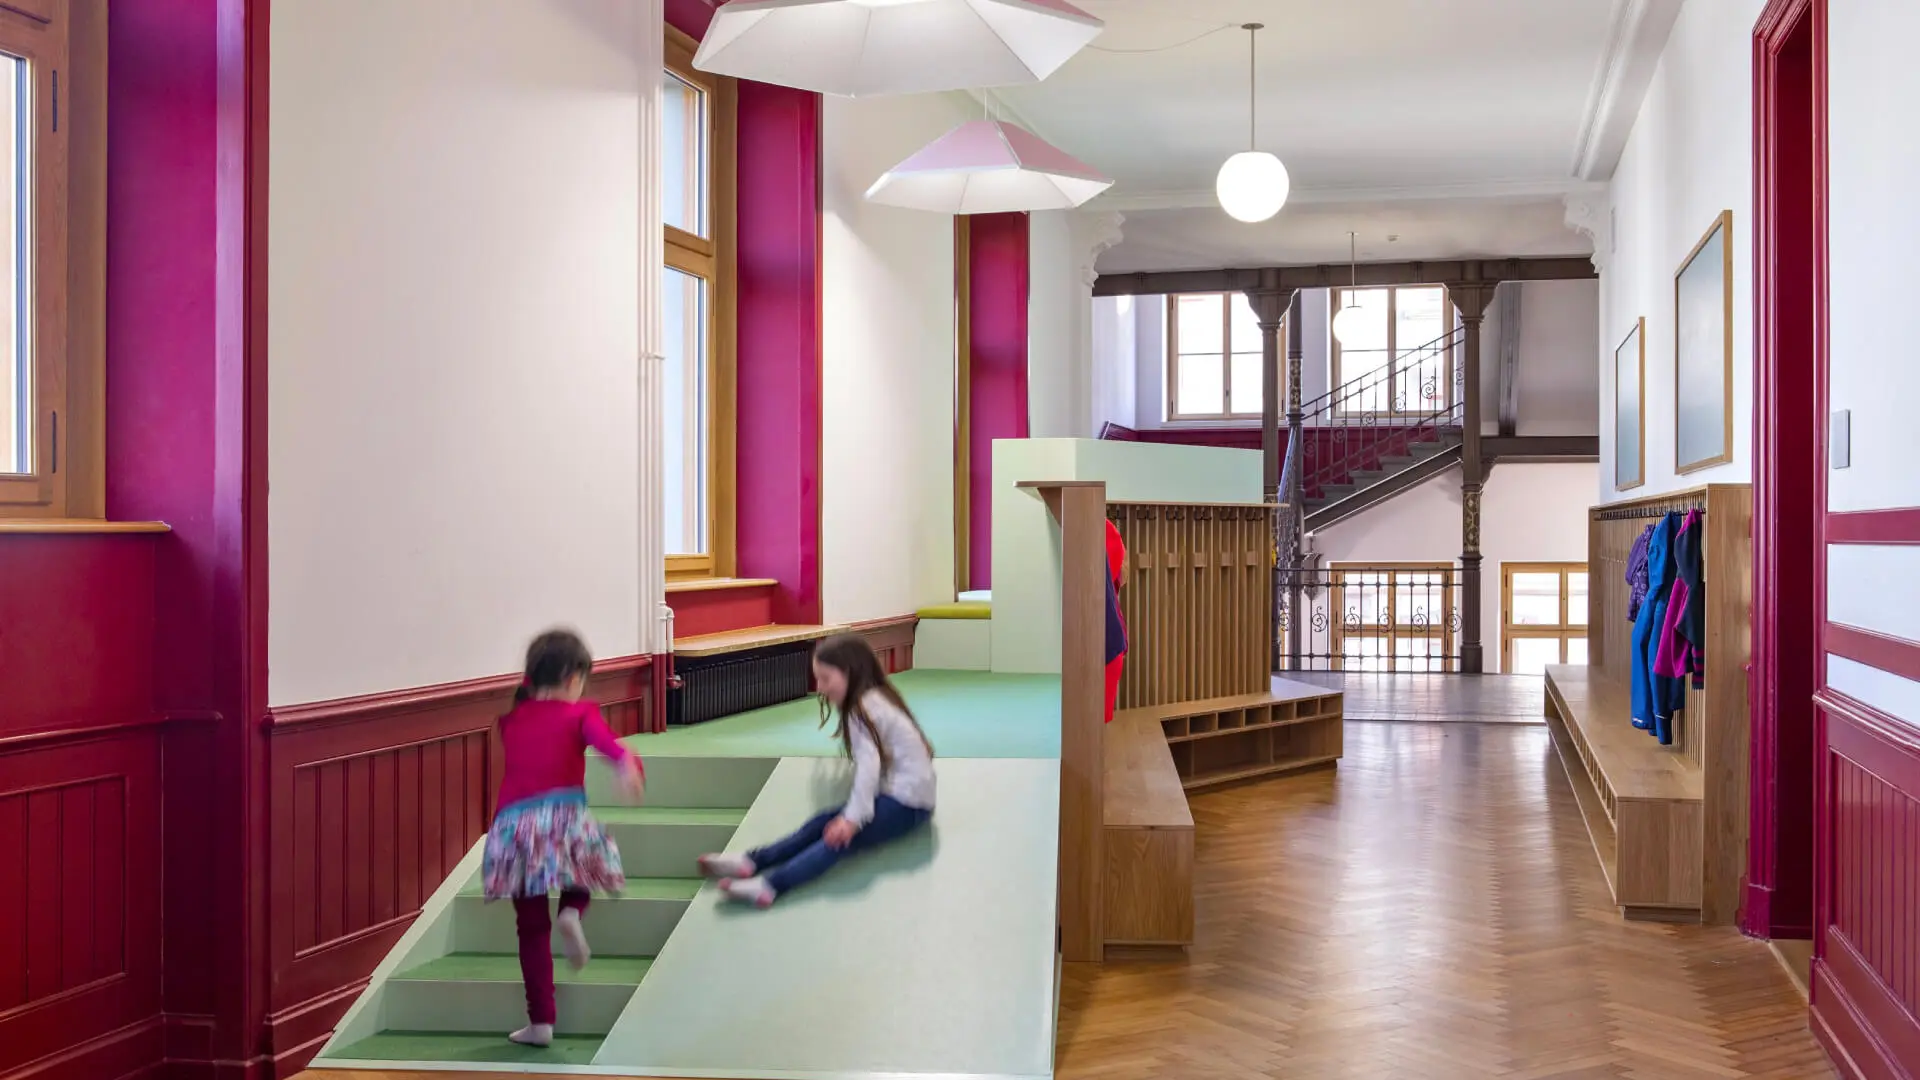 ZMIK turns boring corridors into modern learning spaces